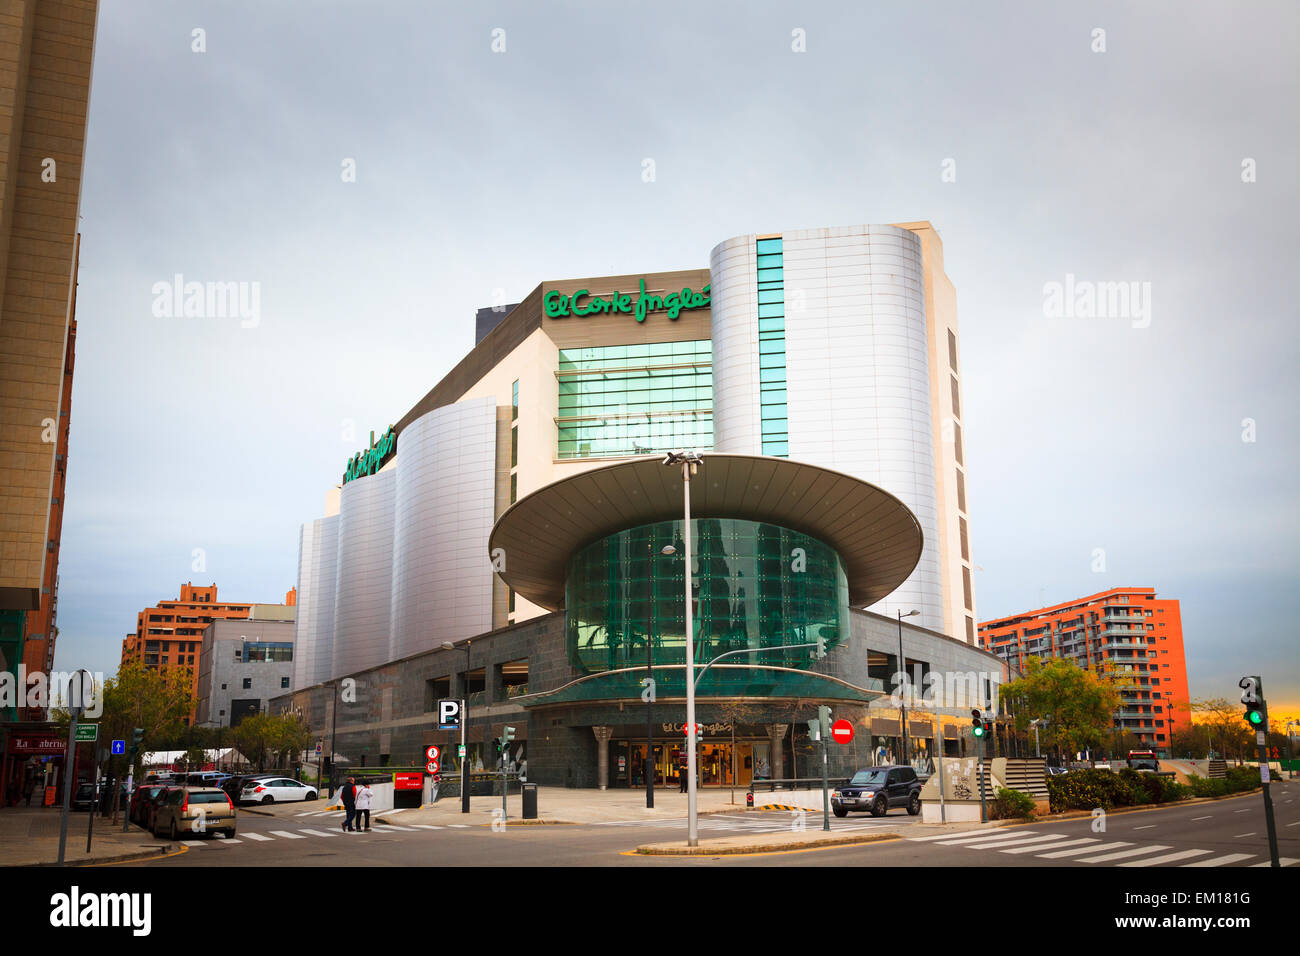 Exterior of El Corte Ingles department store in Valencia Stock Photo